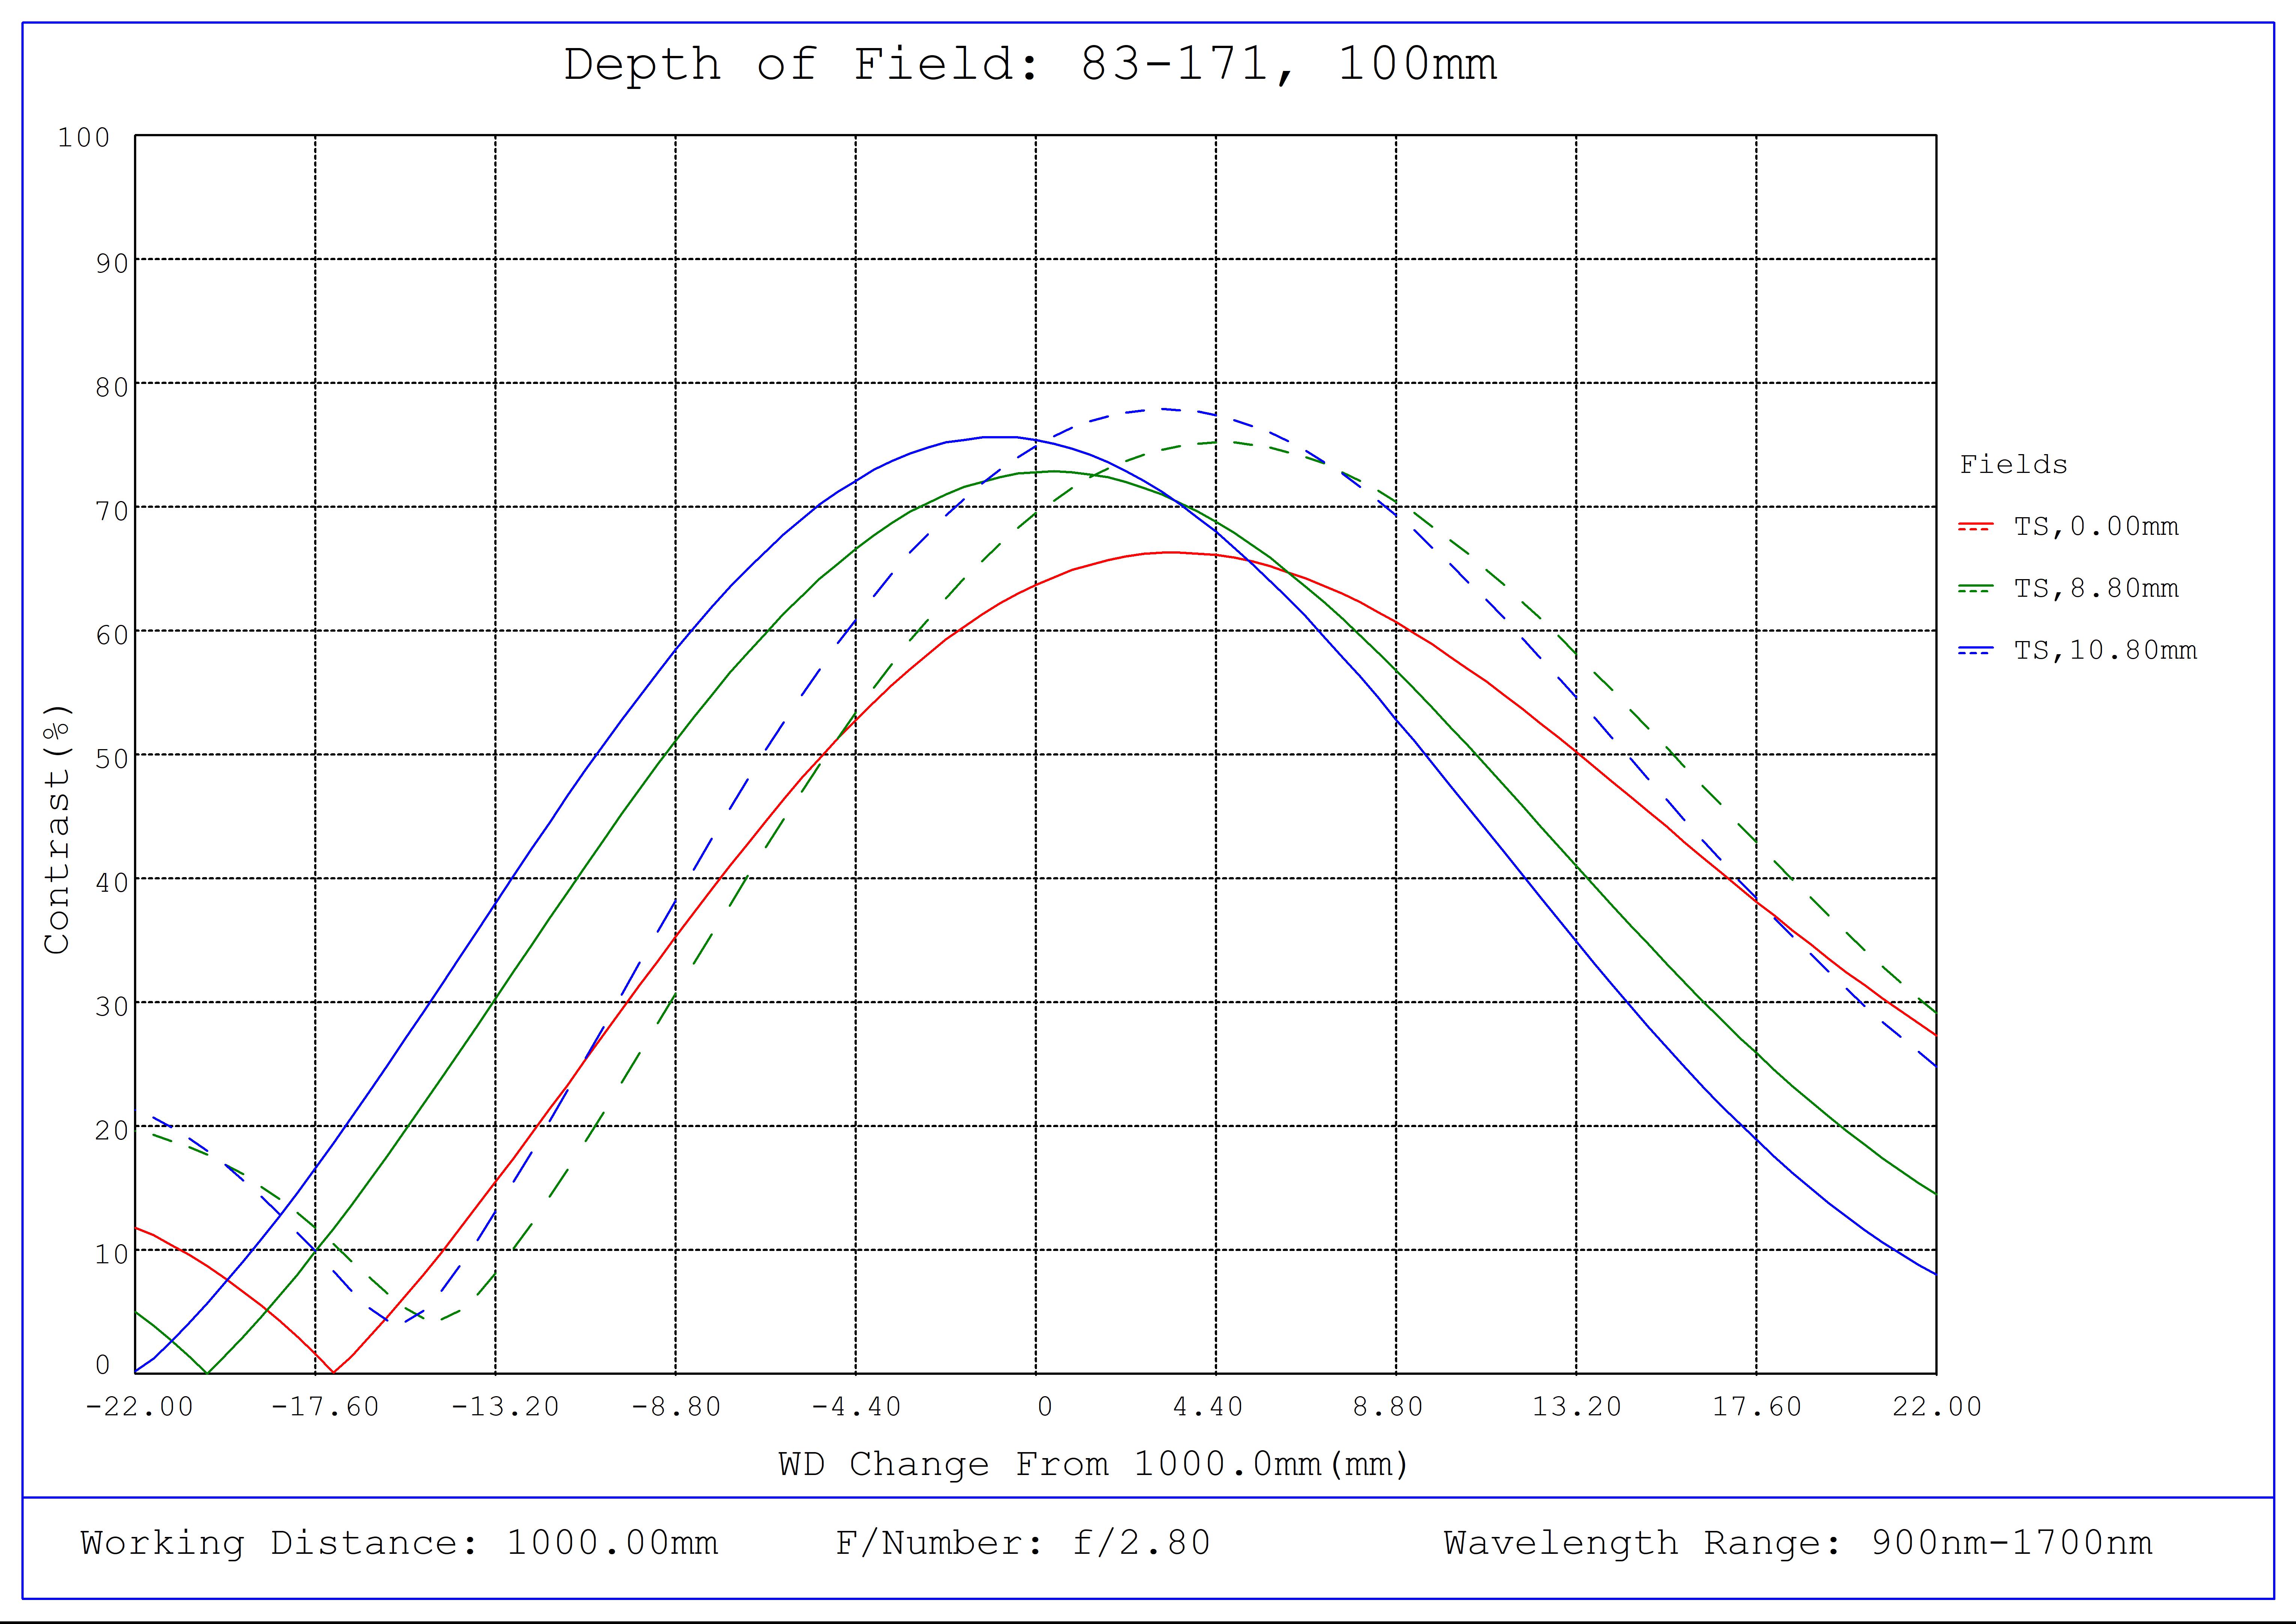 #83-171, 100mm SWIR Series Fixed Focal Length Lens, F-Mount, Depth of Field Plot, 1000mm Working Distance, f2.8